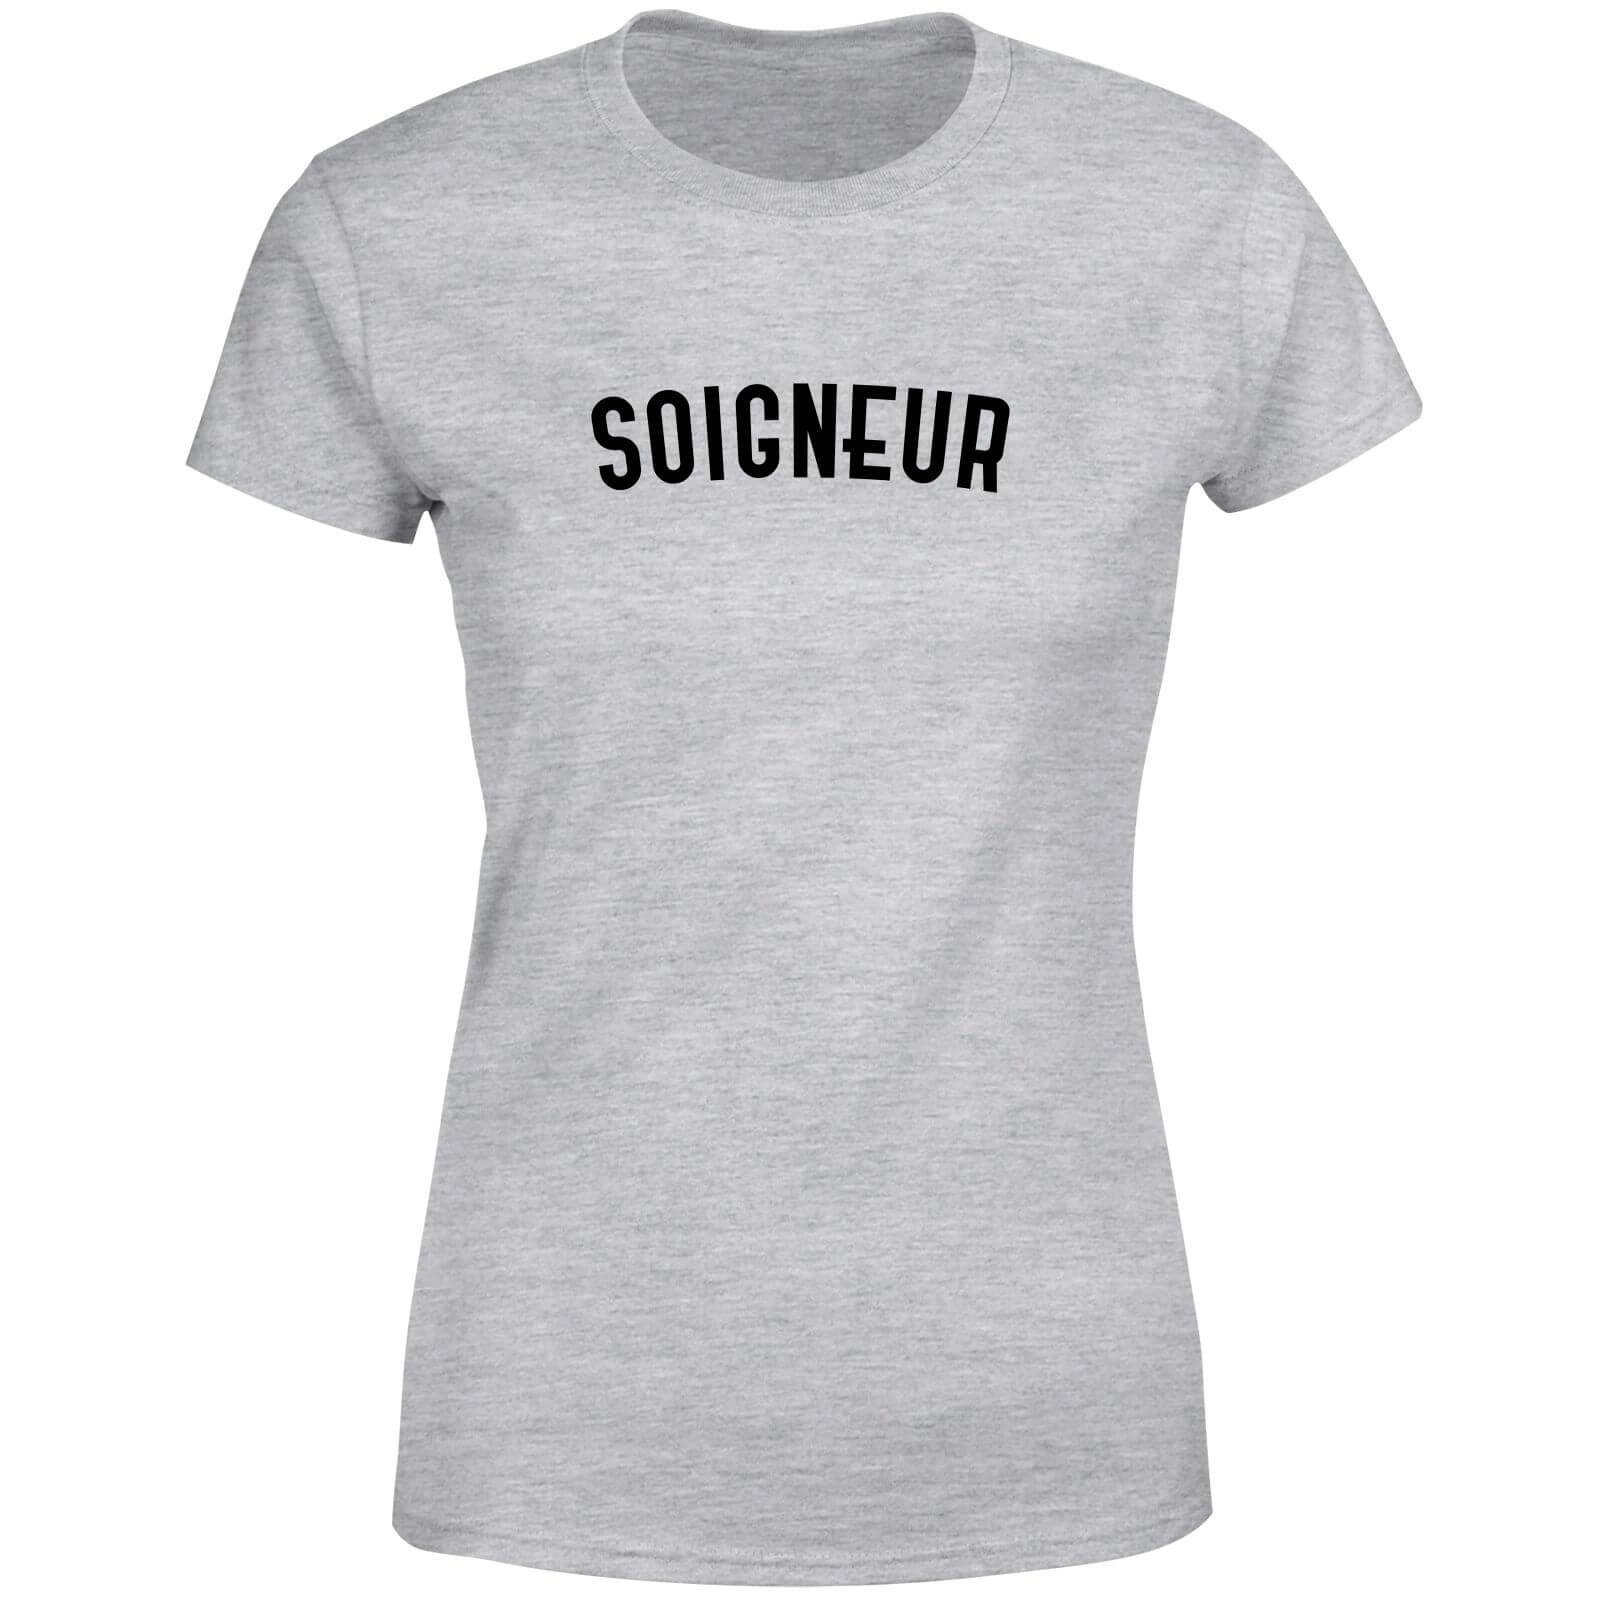 Soigneur Women's T-Shirt - Grey - 4XL - Grey